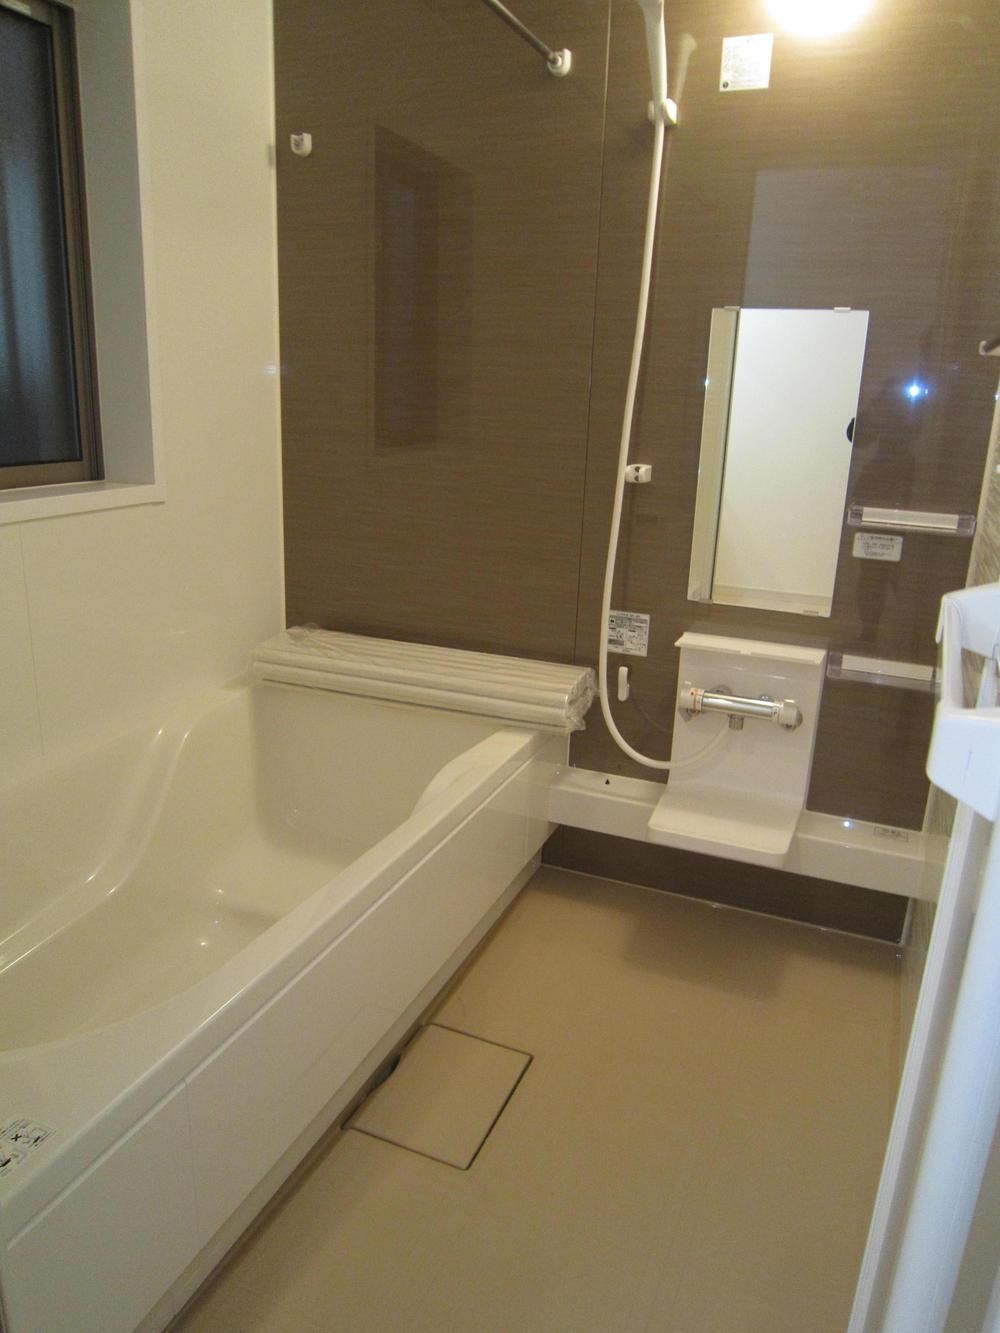 Same specifications photo (bathroom). Bathroom specification example